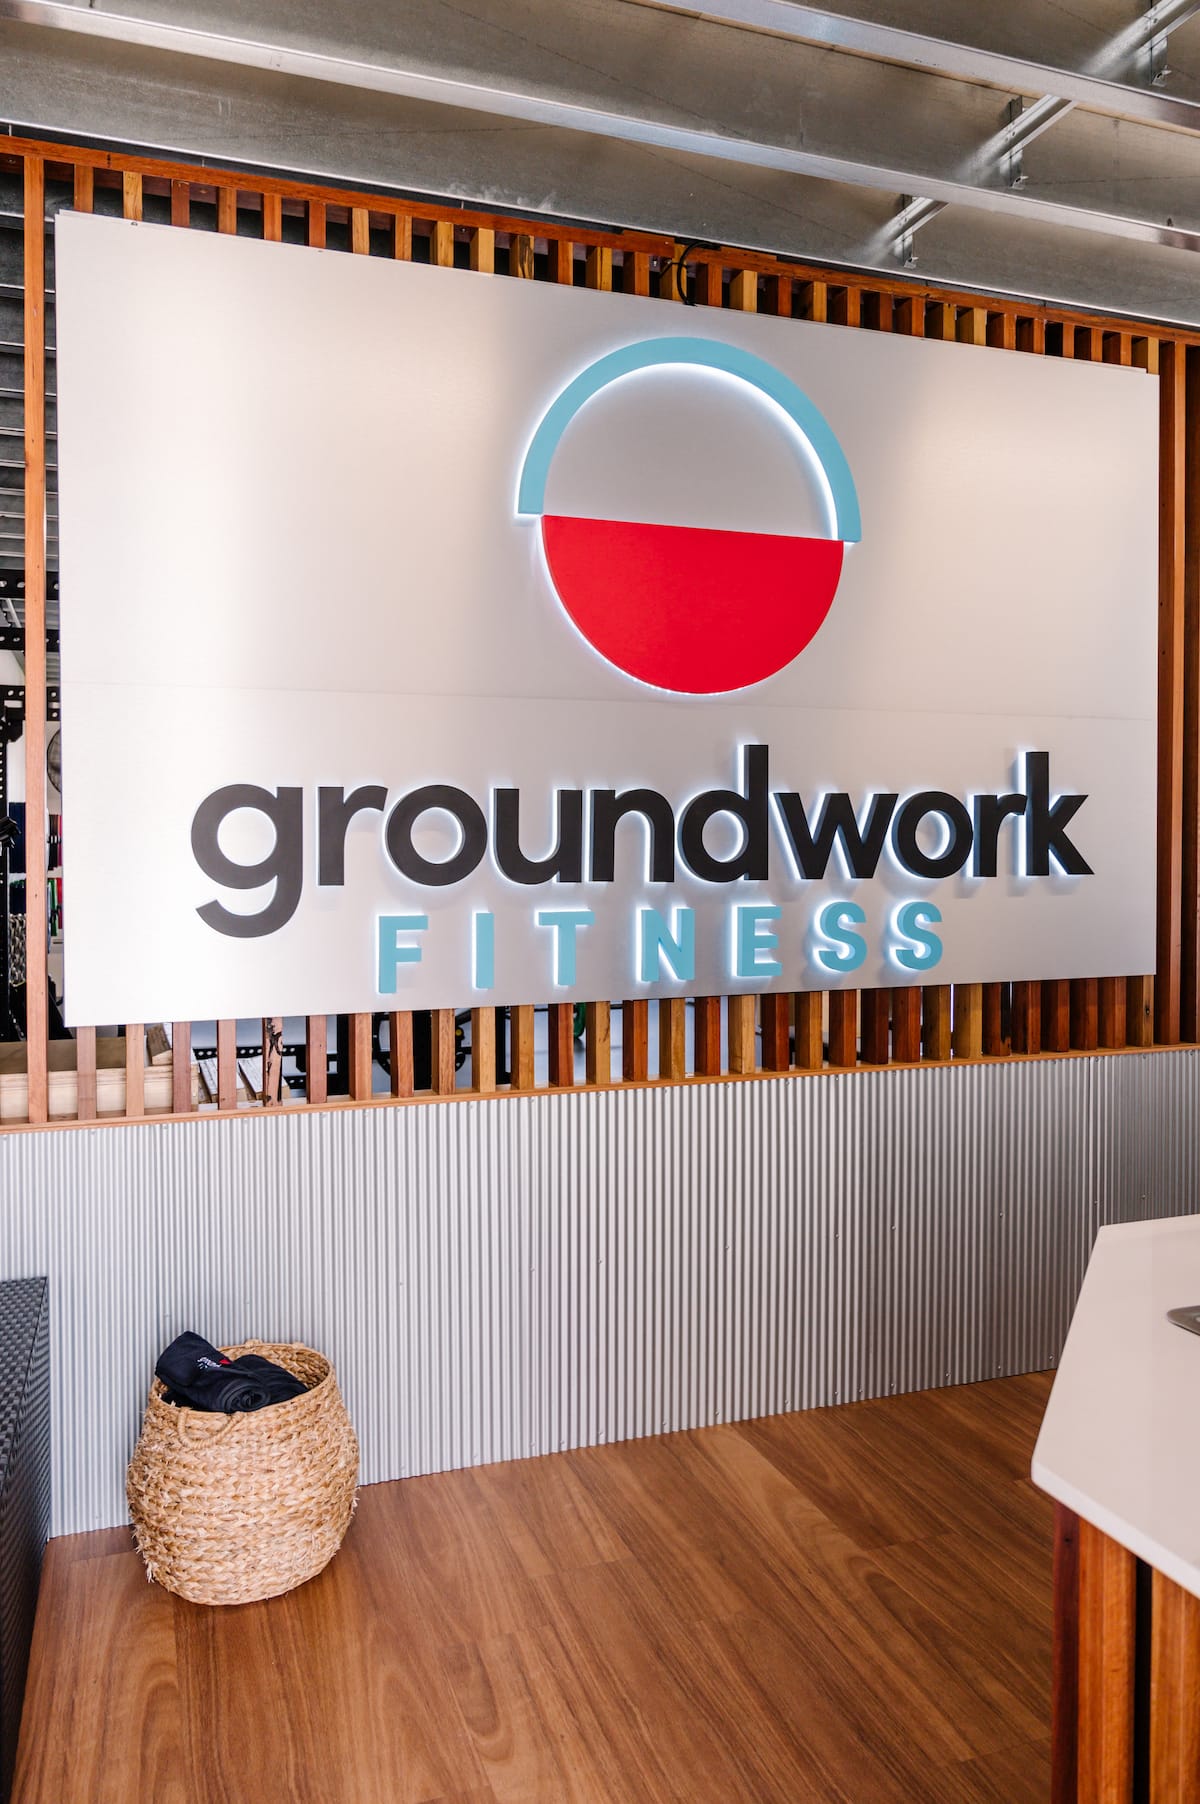 groundwork fitness gym carrington newcastle